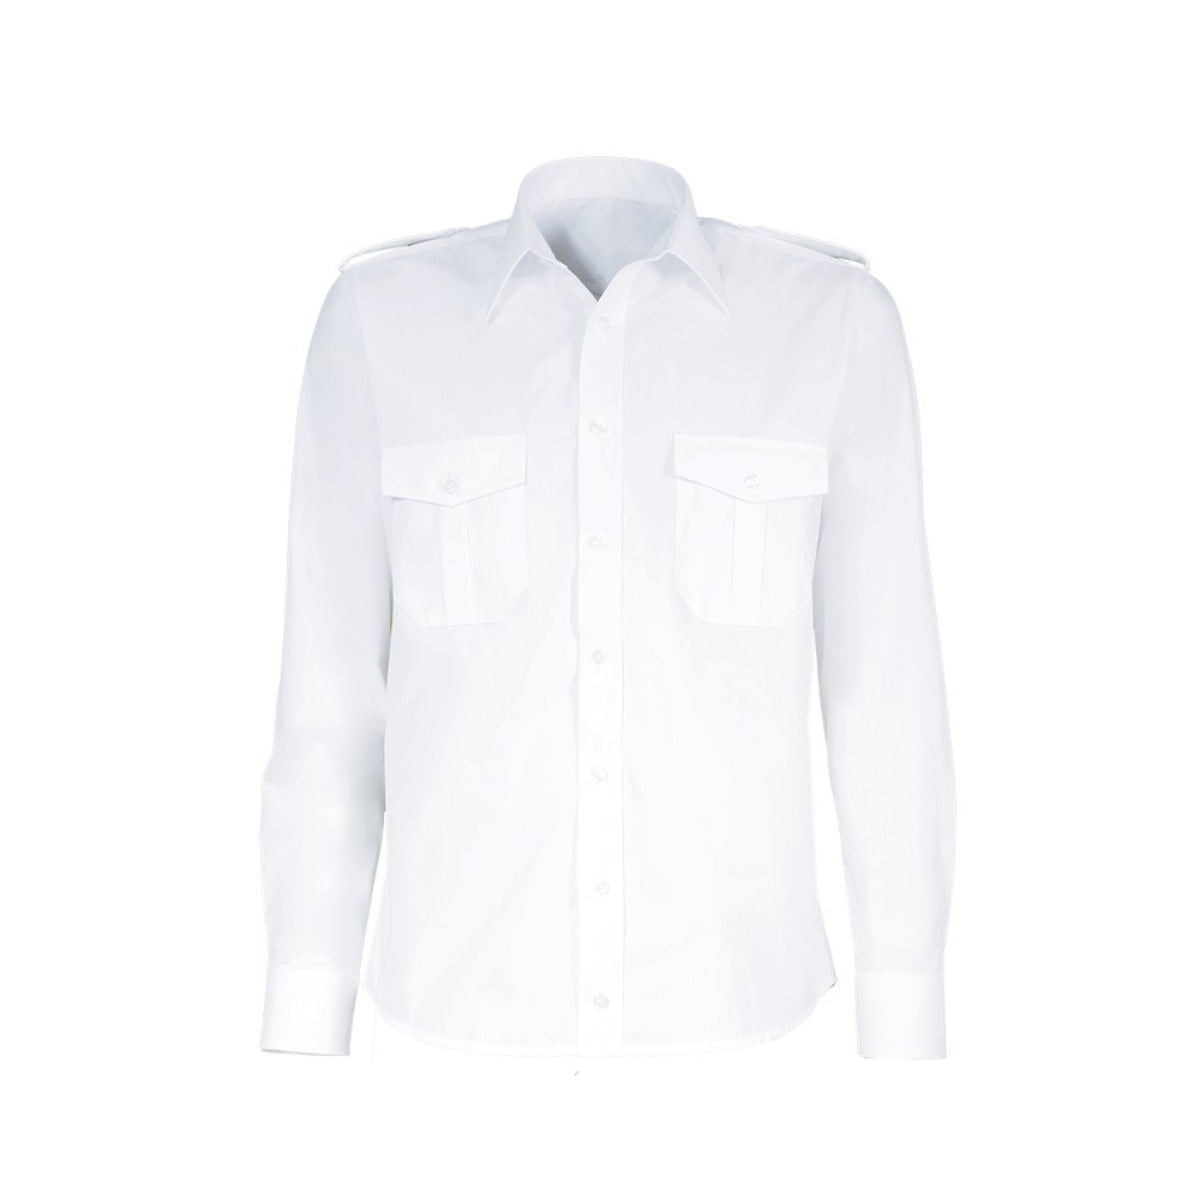 Pilot Shirt - Long Sleeve - Comfort Fit